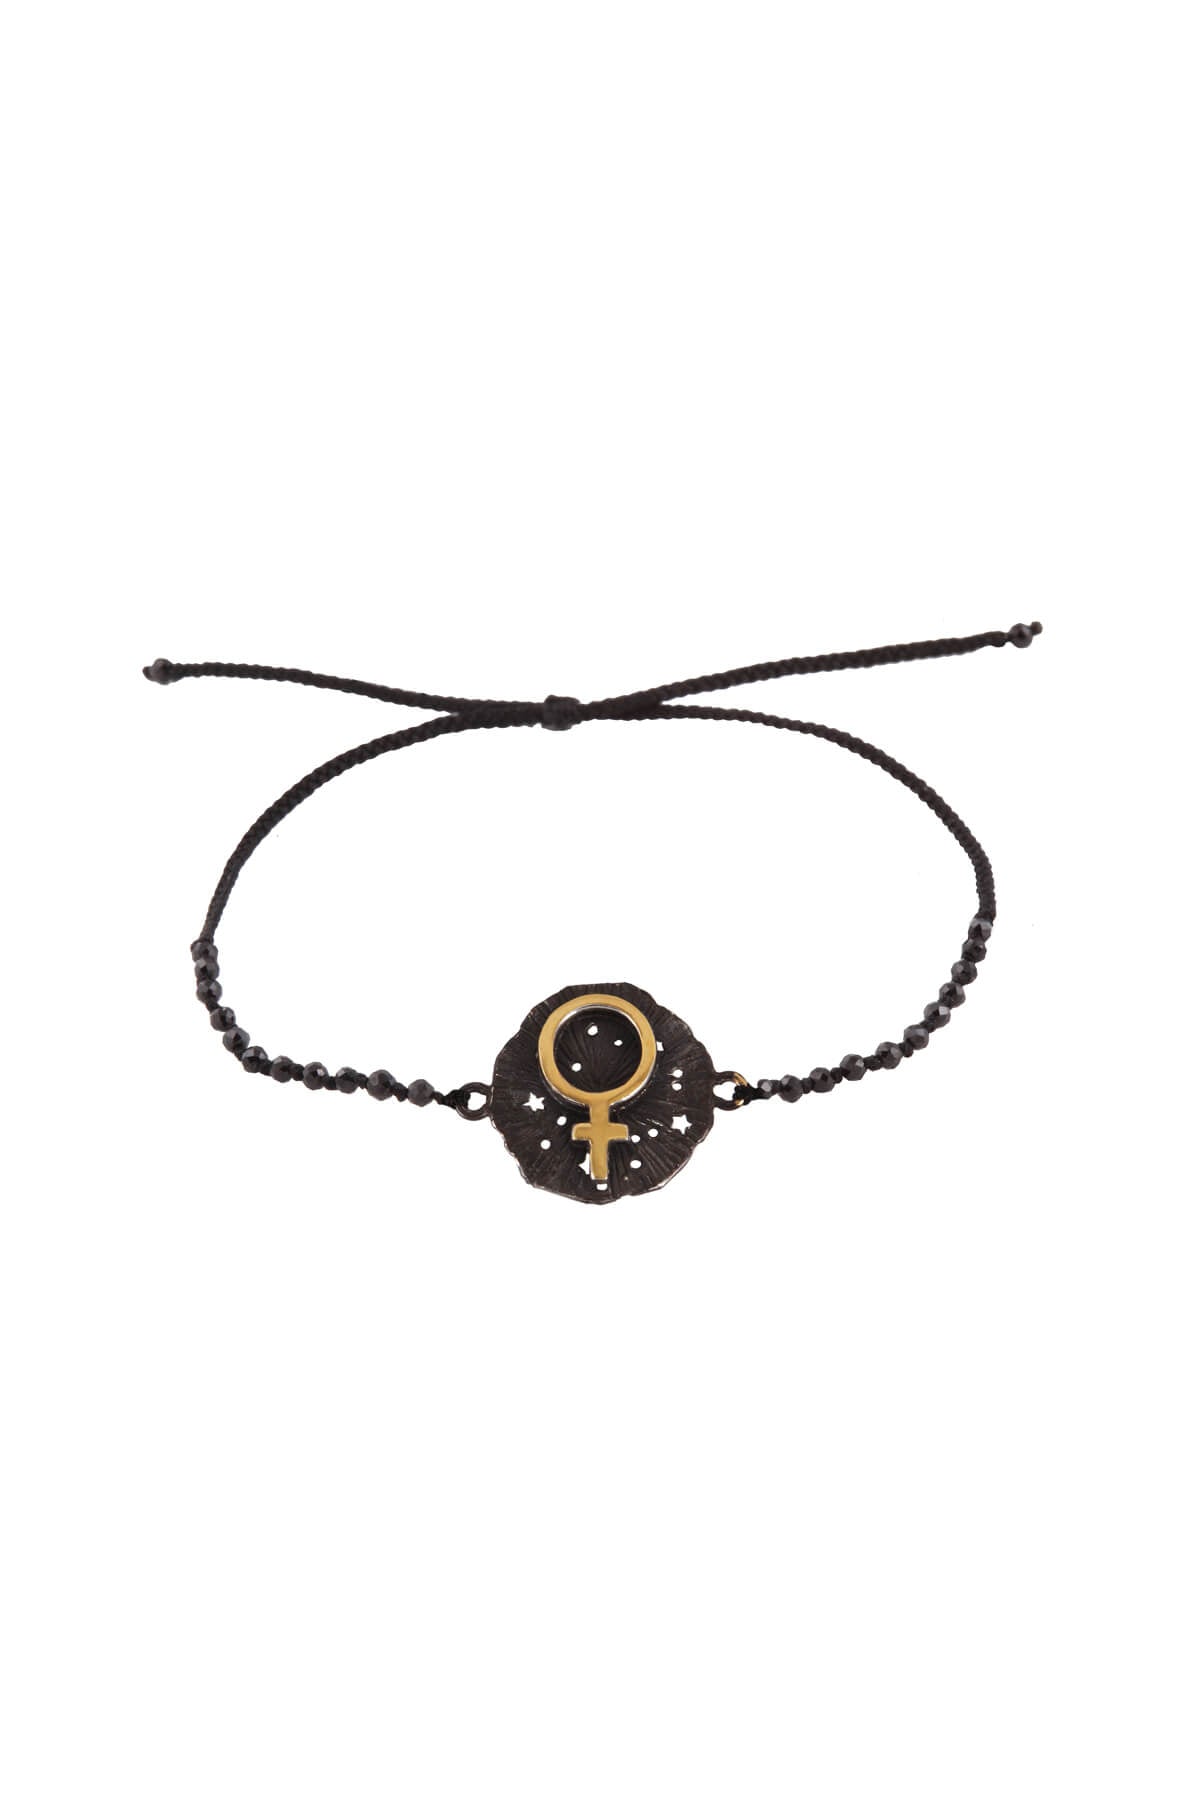 Venus medallion bracelet with semiprecious stone beads. Silver, gold-plated, oxidized